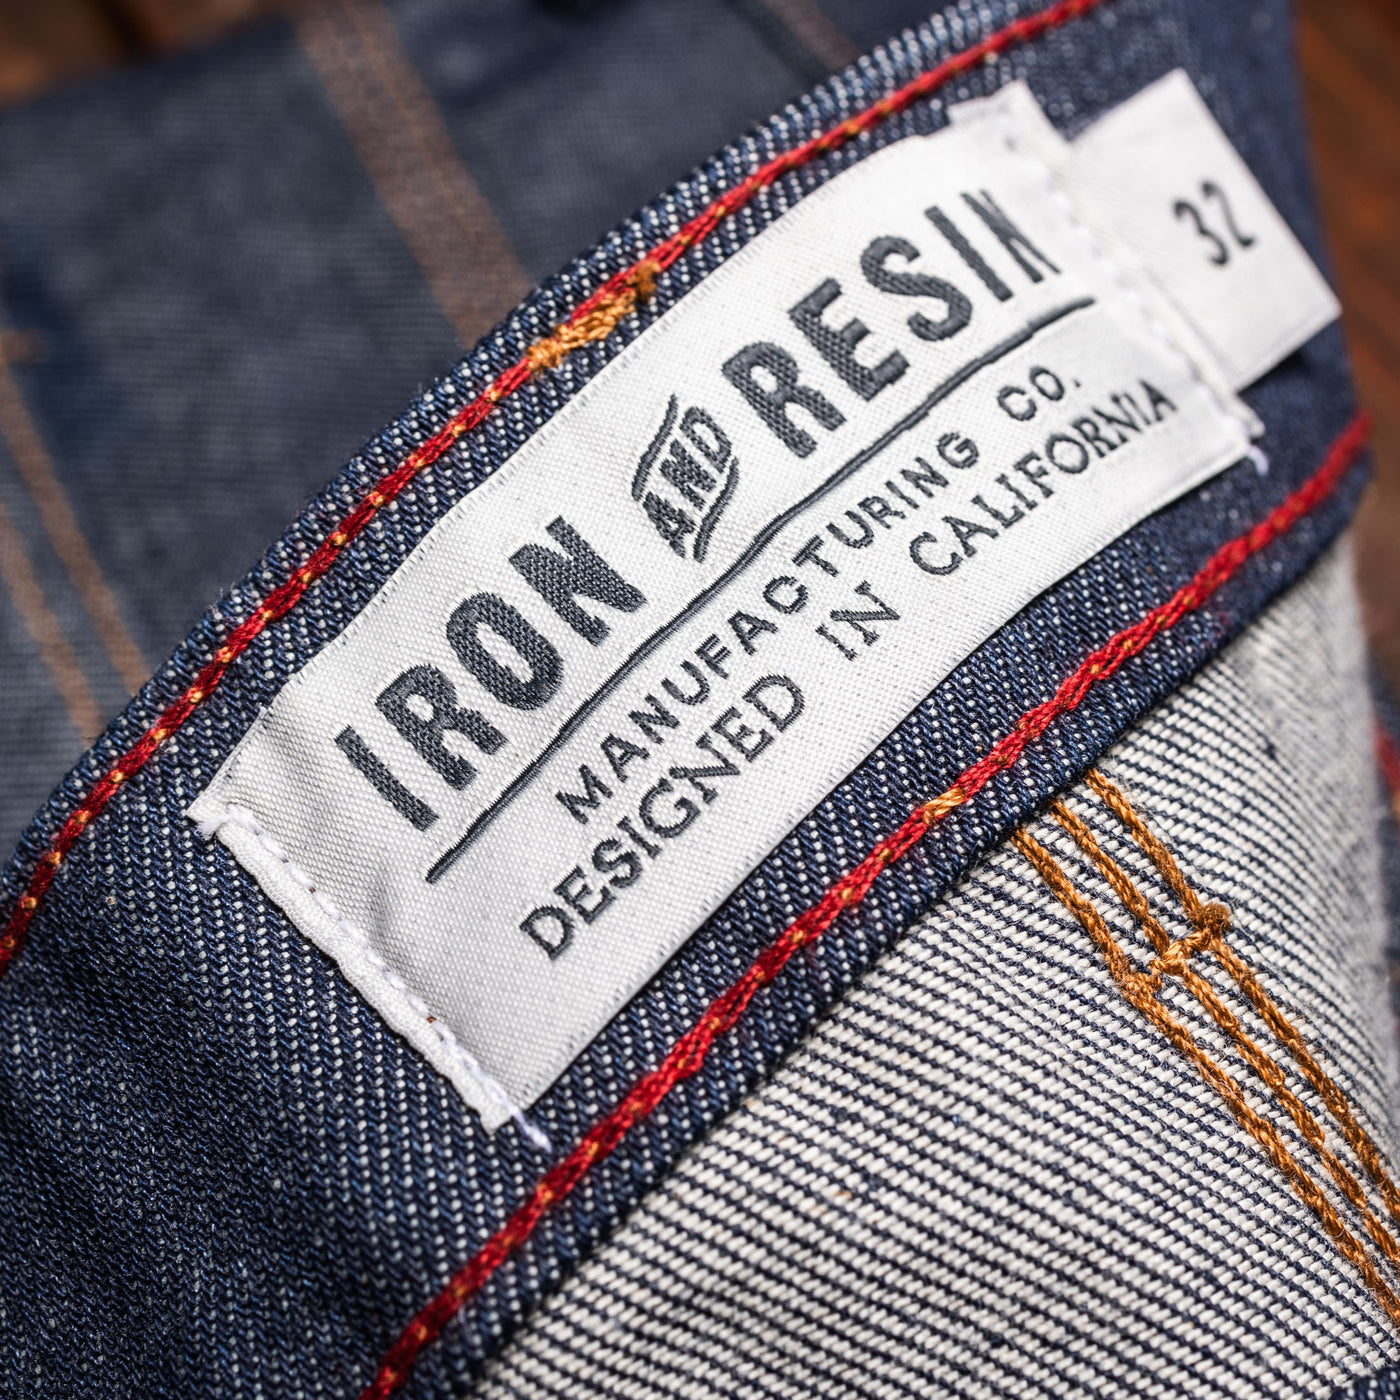 Enduro Denim Jeans: Built To Last. – Iron & Resin